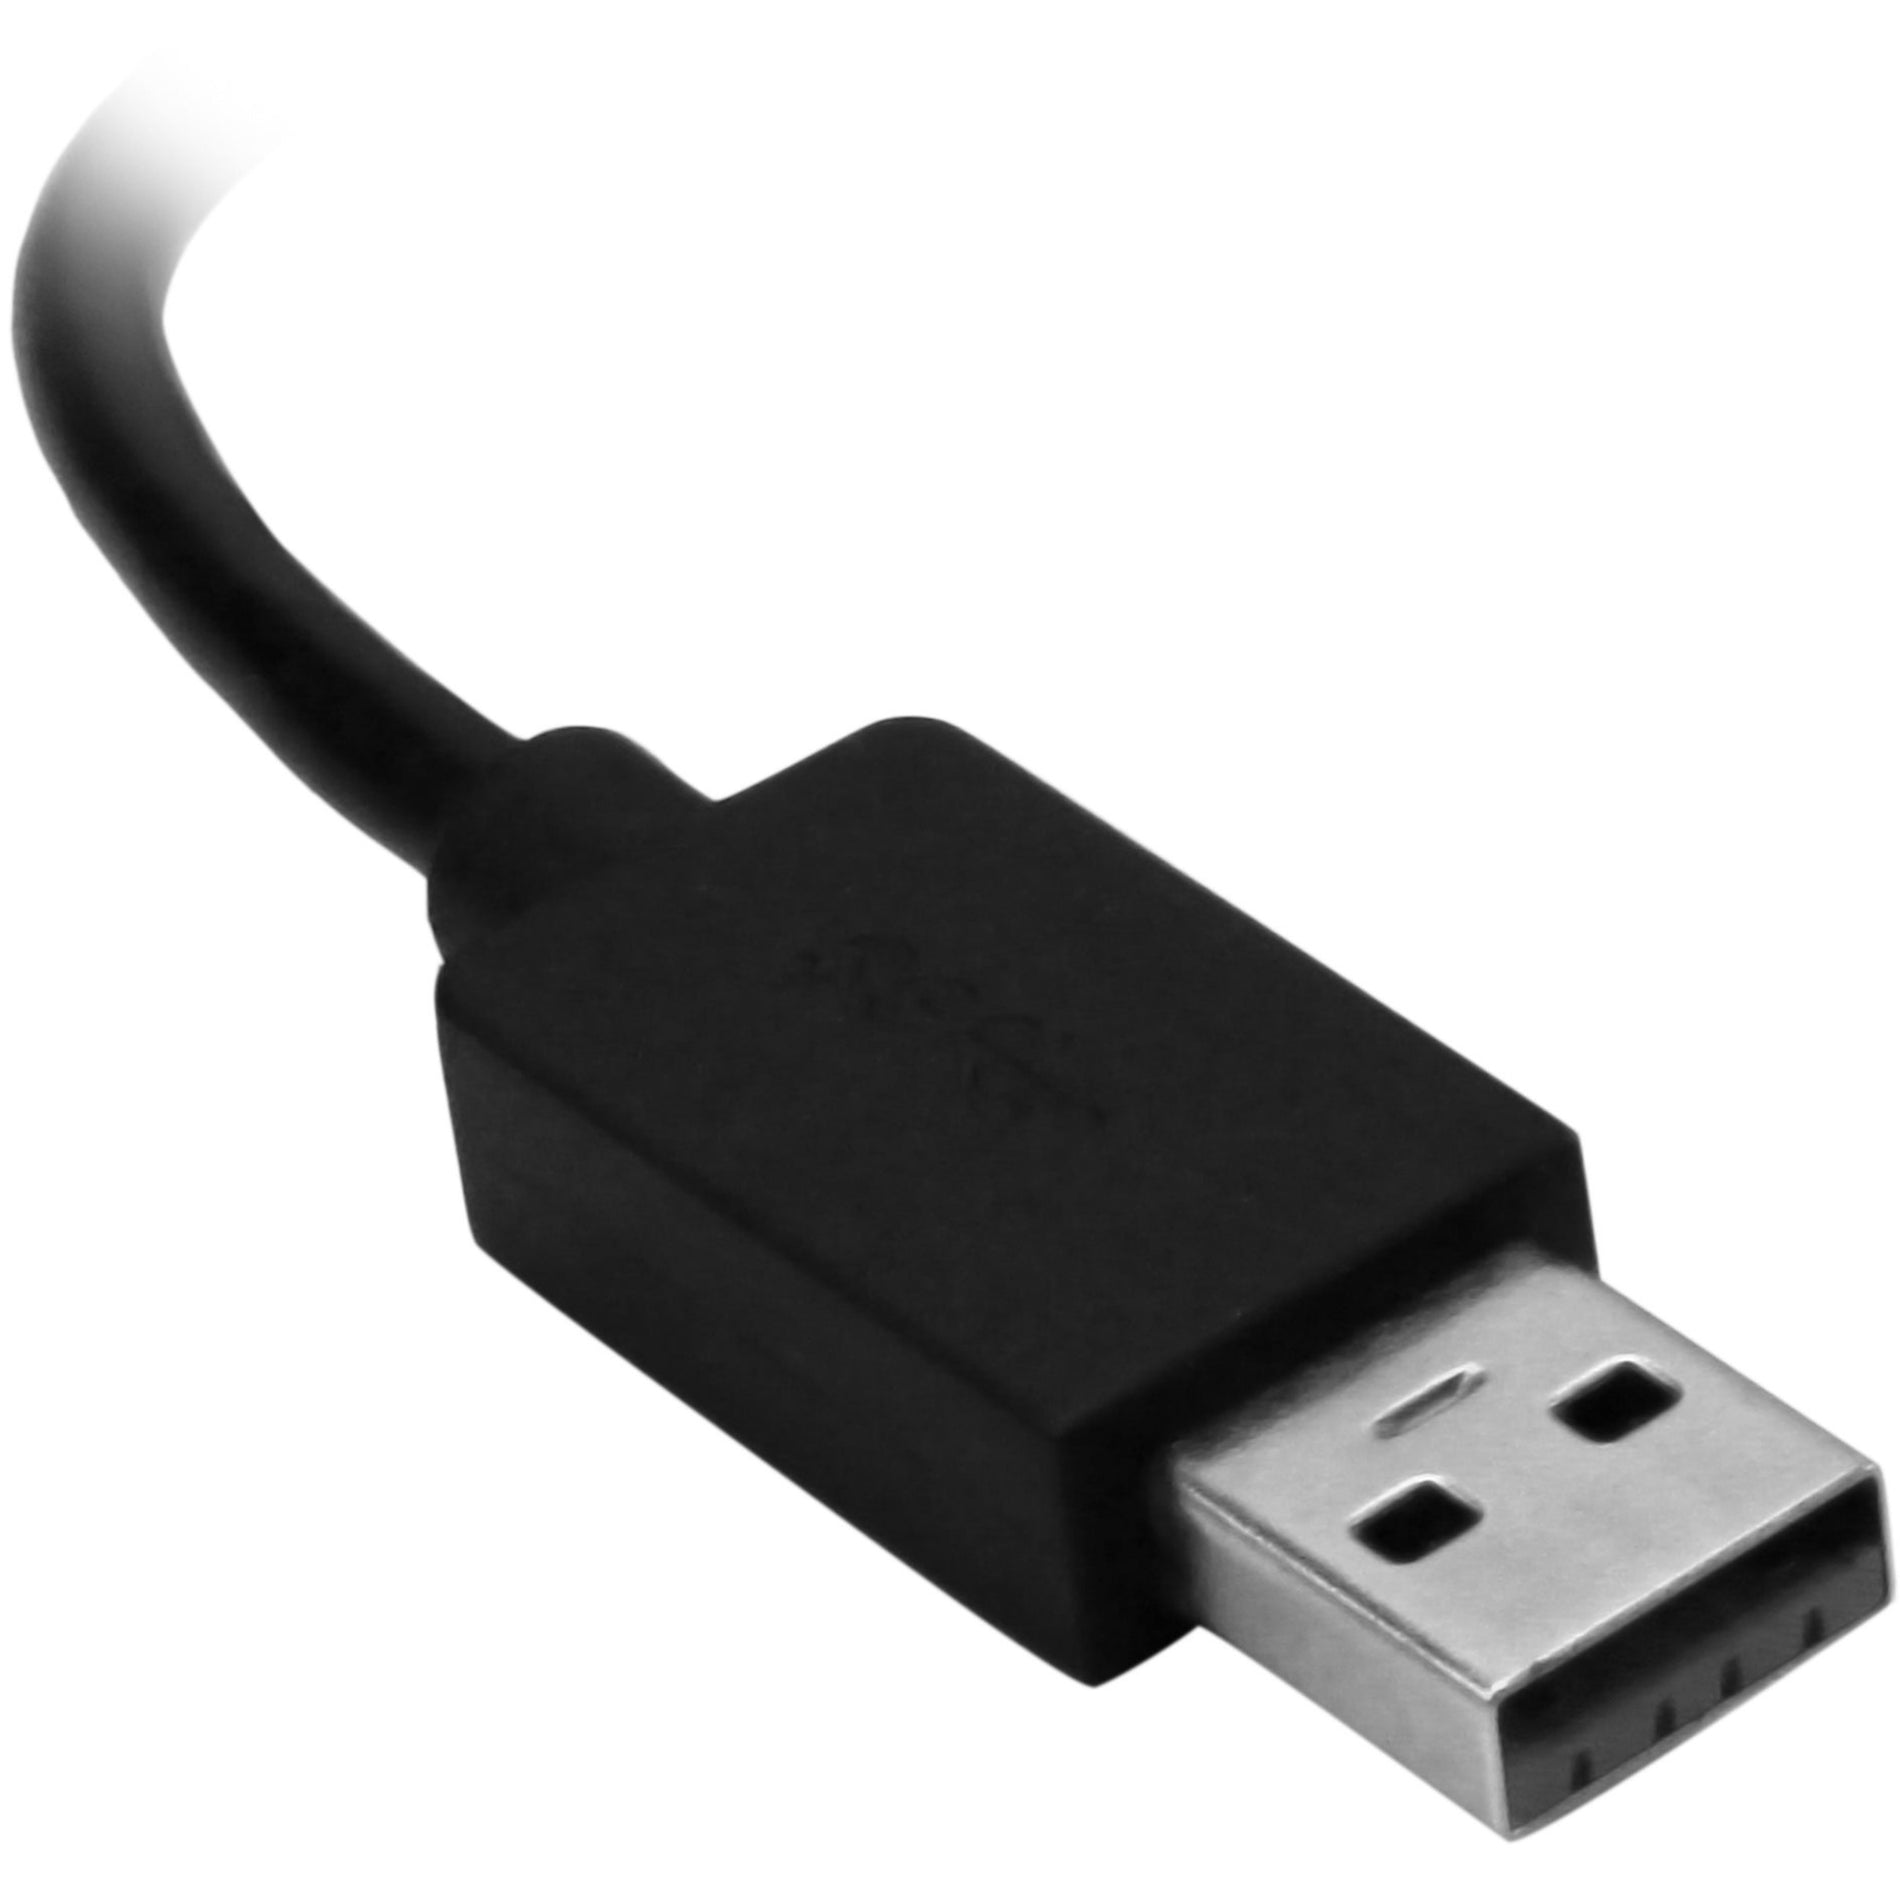 StarTech.com HB30A3A1CSFS 4-port USB Hub, USB Type C, 4 USB 3.0 Ports, TAA Compliant